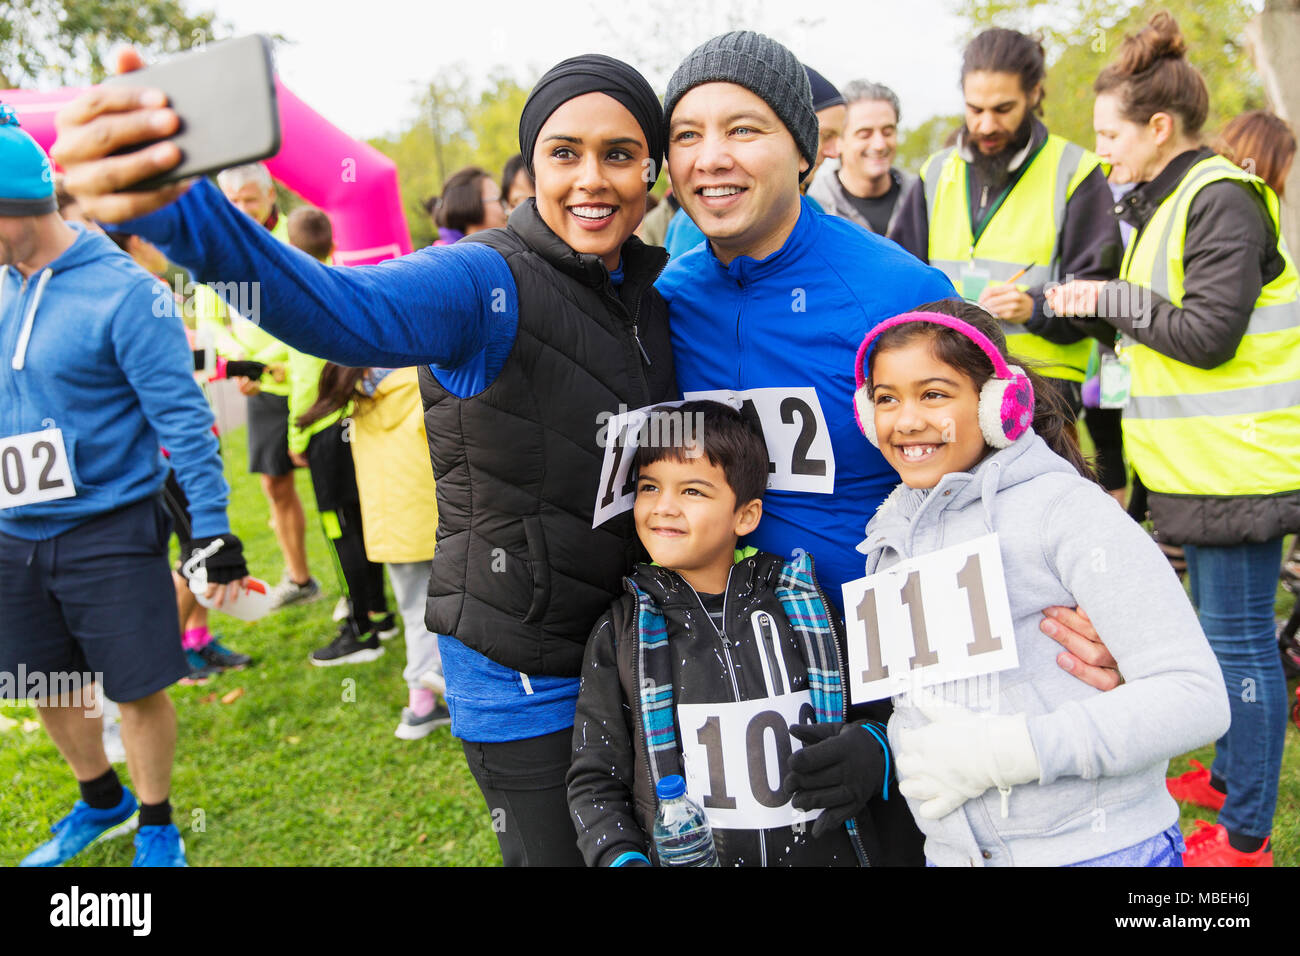 Family charity run runners taking selfie with camera phone Stock Photo